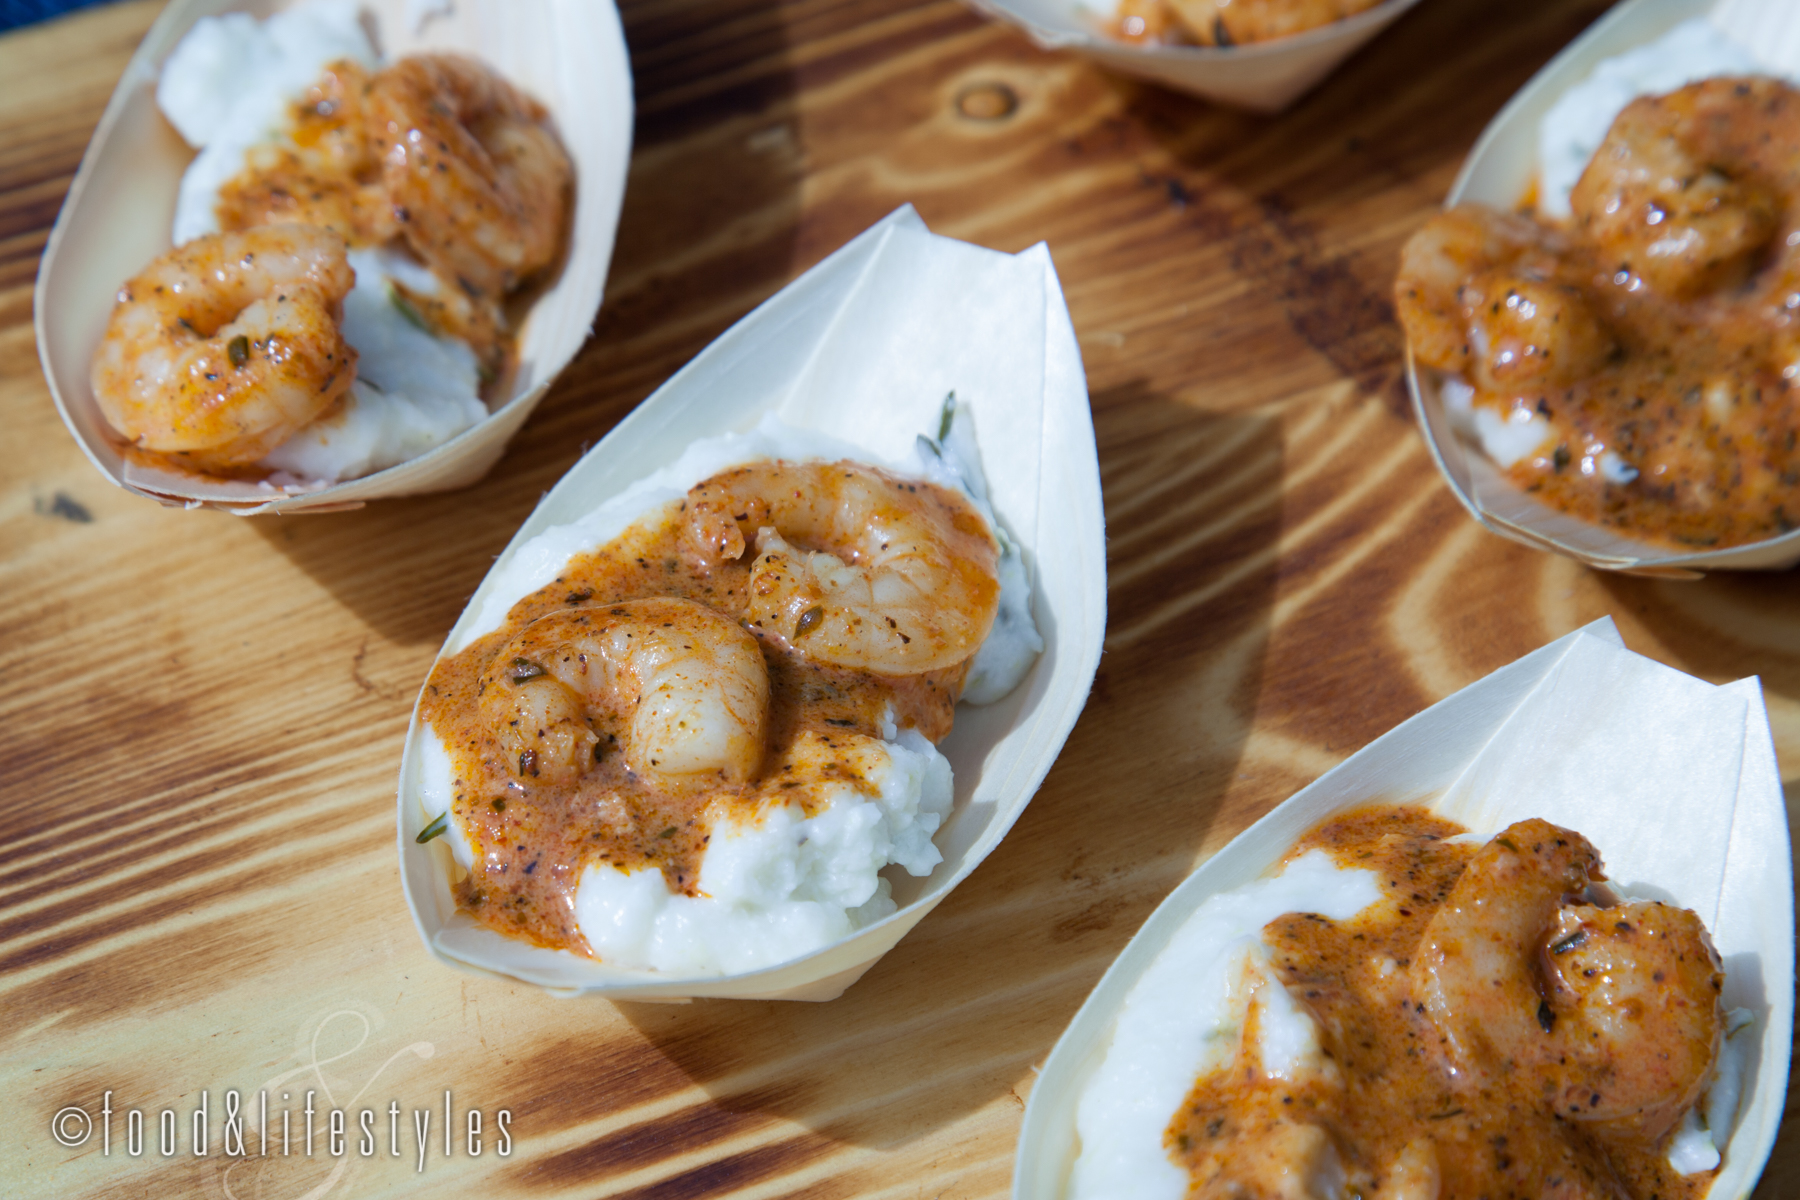 Tavern Americana: Blackened shrimp with brie grits